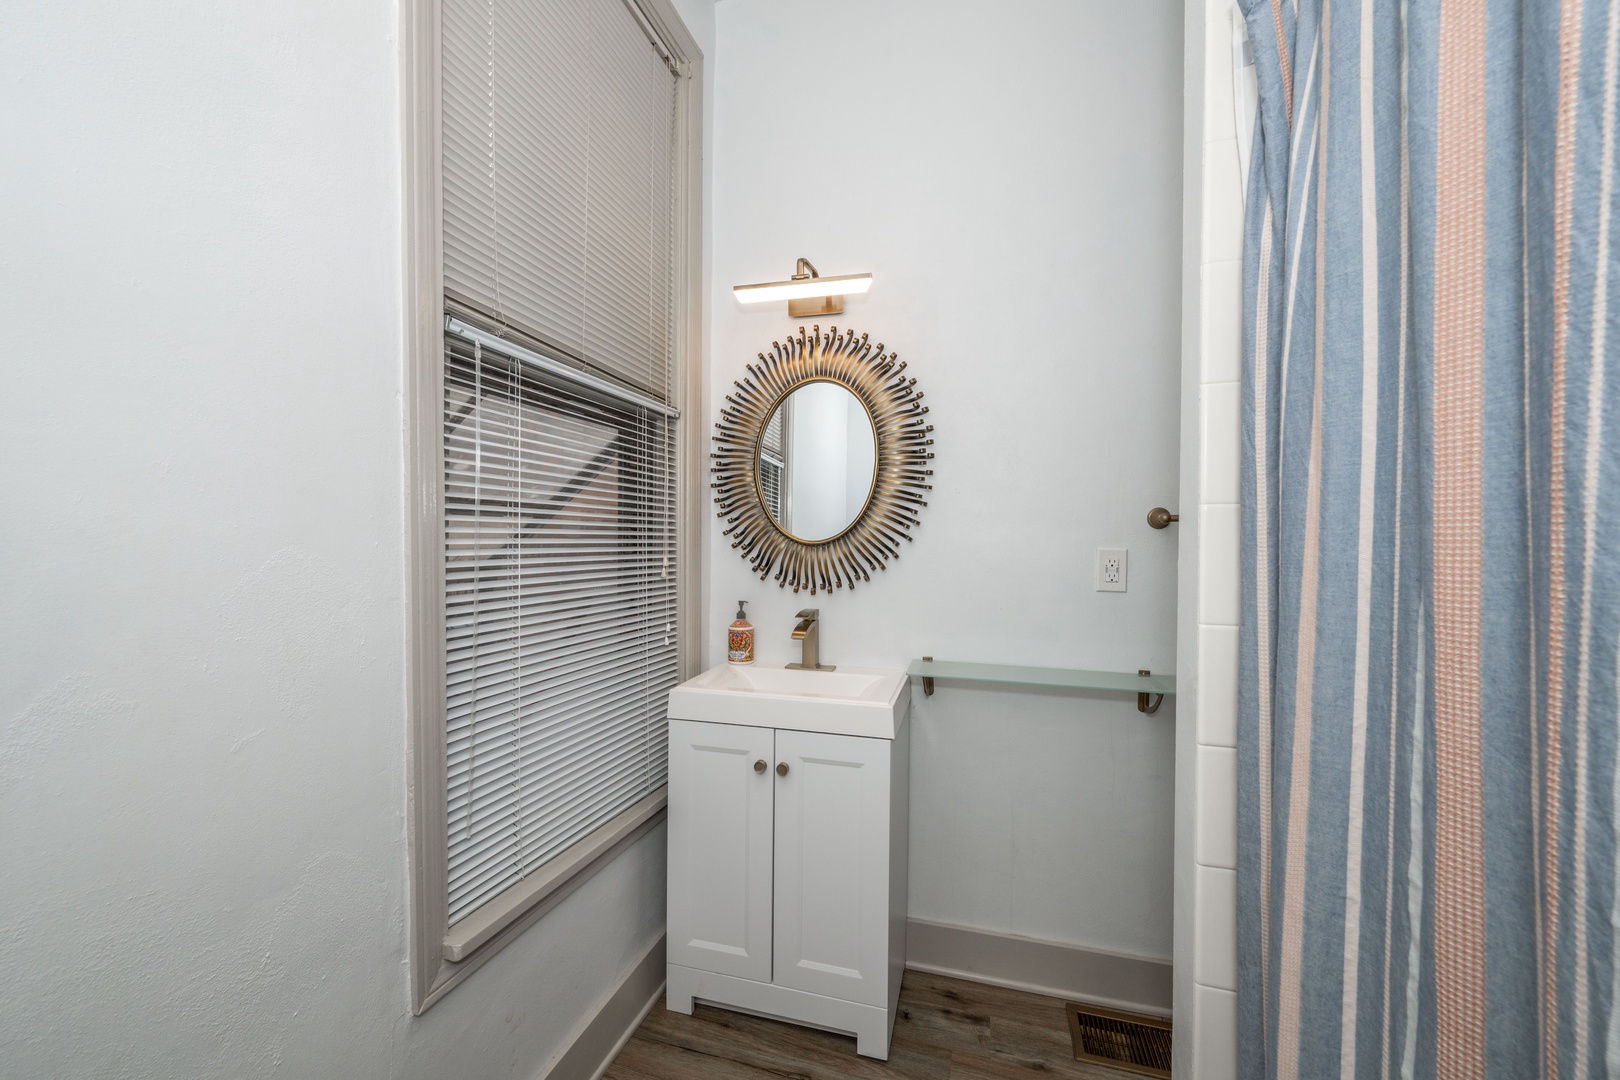 The full bathroom features a sleek single vanity & shower/tub combo